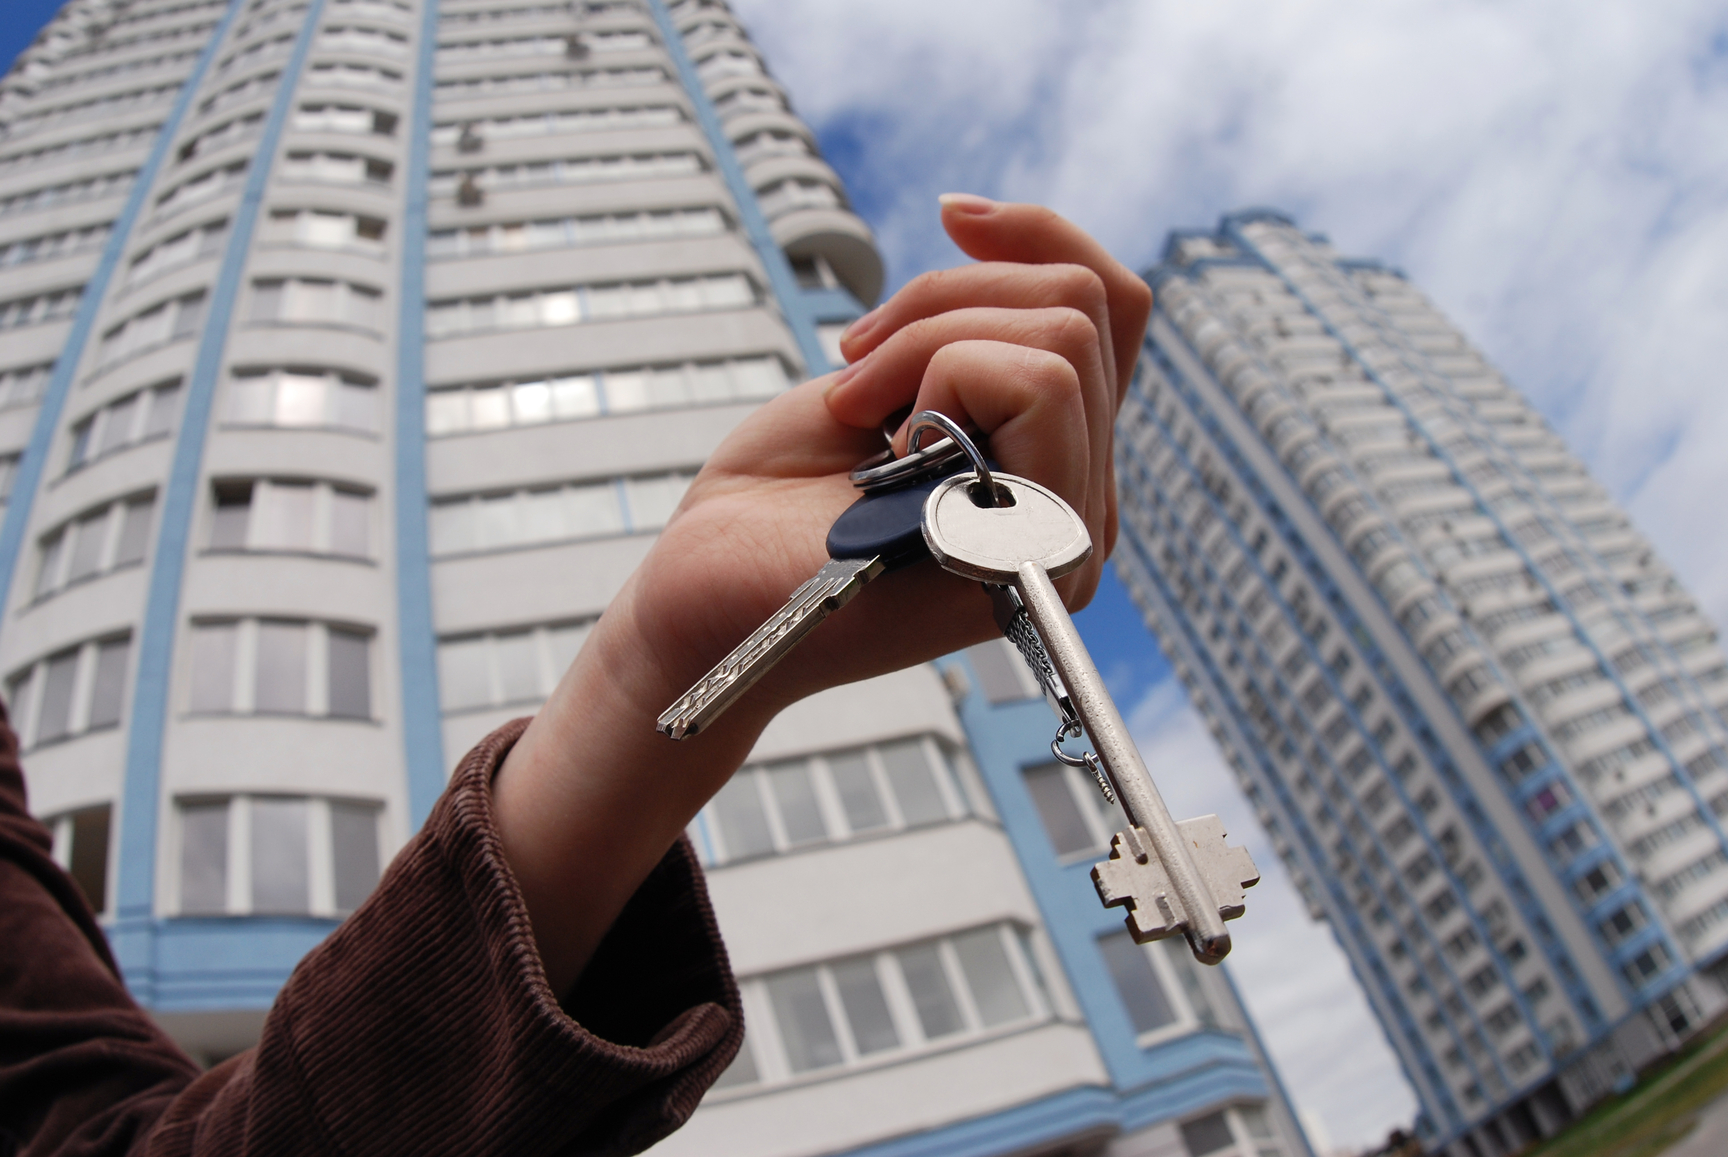 Жилье увольняемым. Ключи от квартиры. Квартира ключи. Ключи от квартиры в руке. Ключи от новой квартиры.